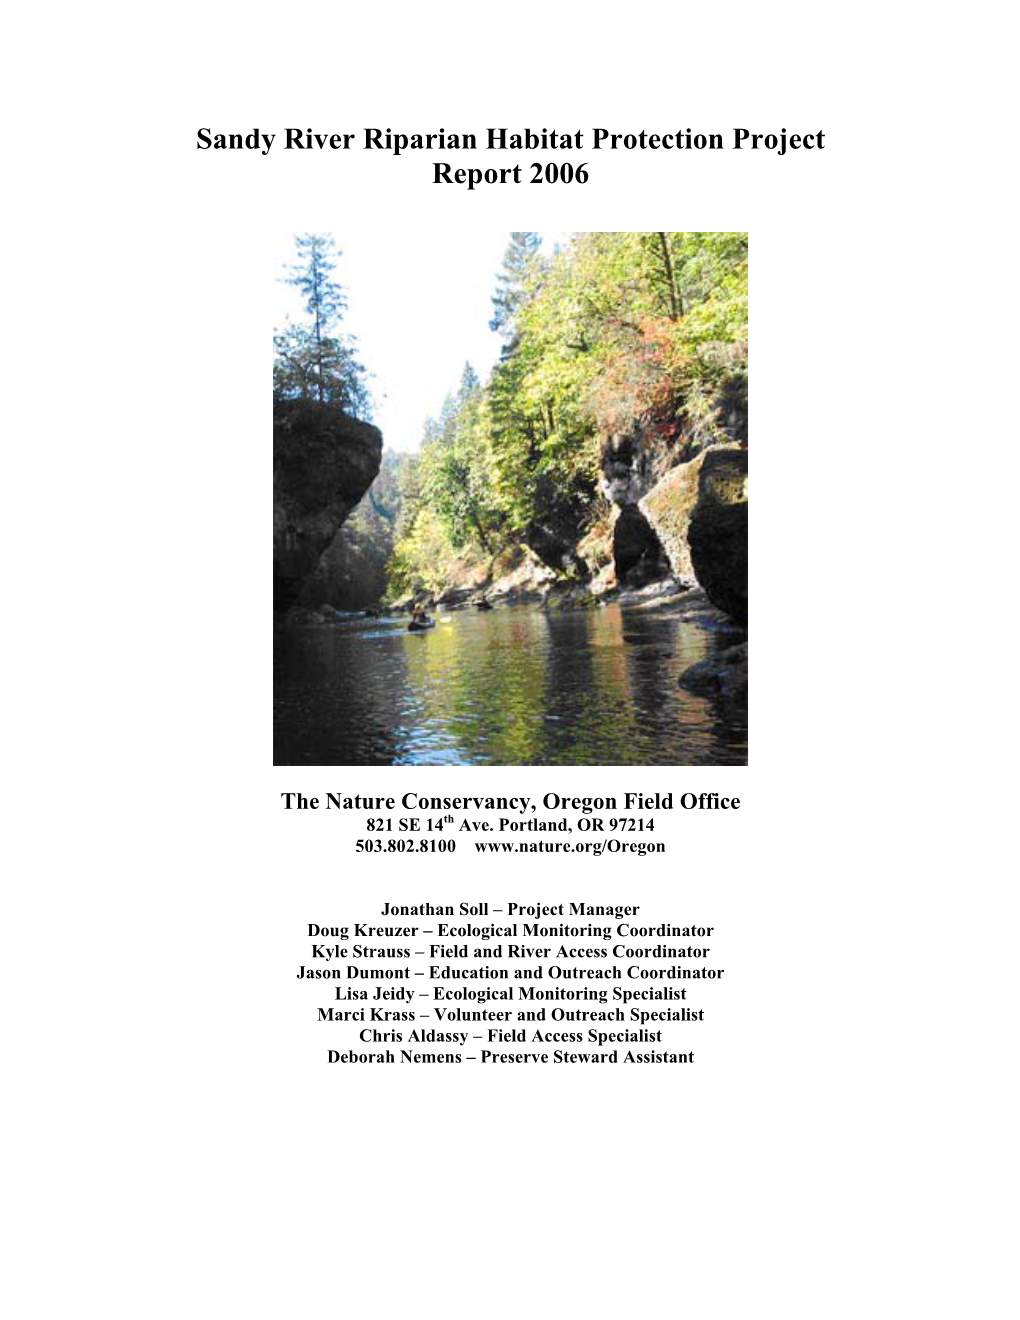 Sandy River Riparian Habitat Protection Project Report 2006